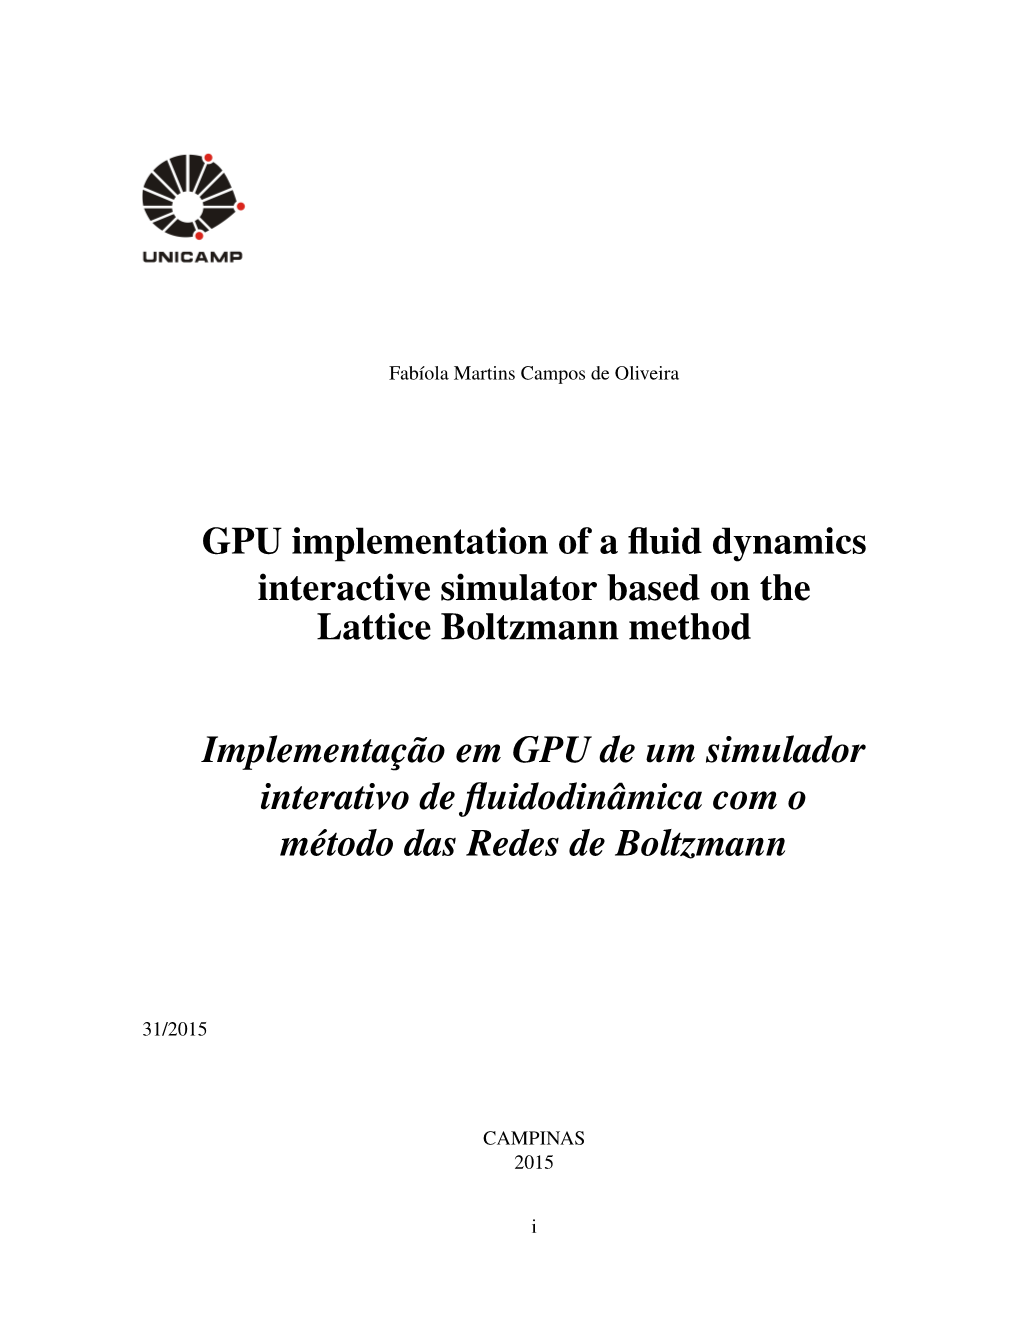 GPU Implementation of a Fluid Dynamics Interactive Simulator